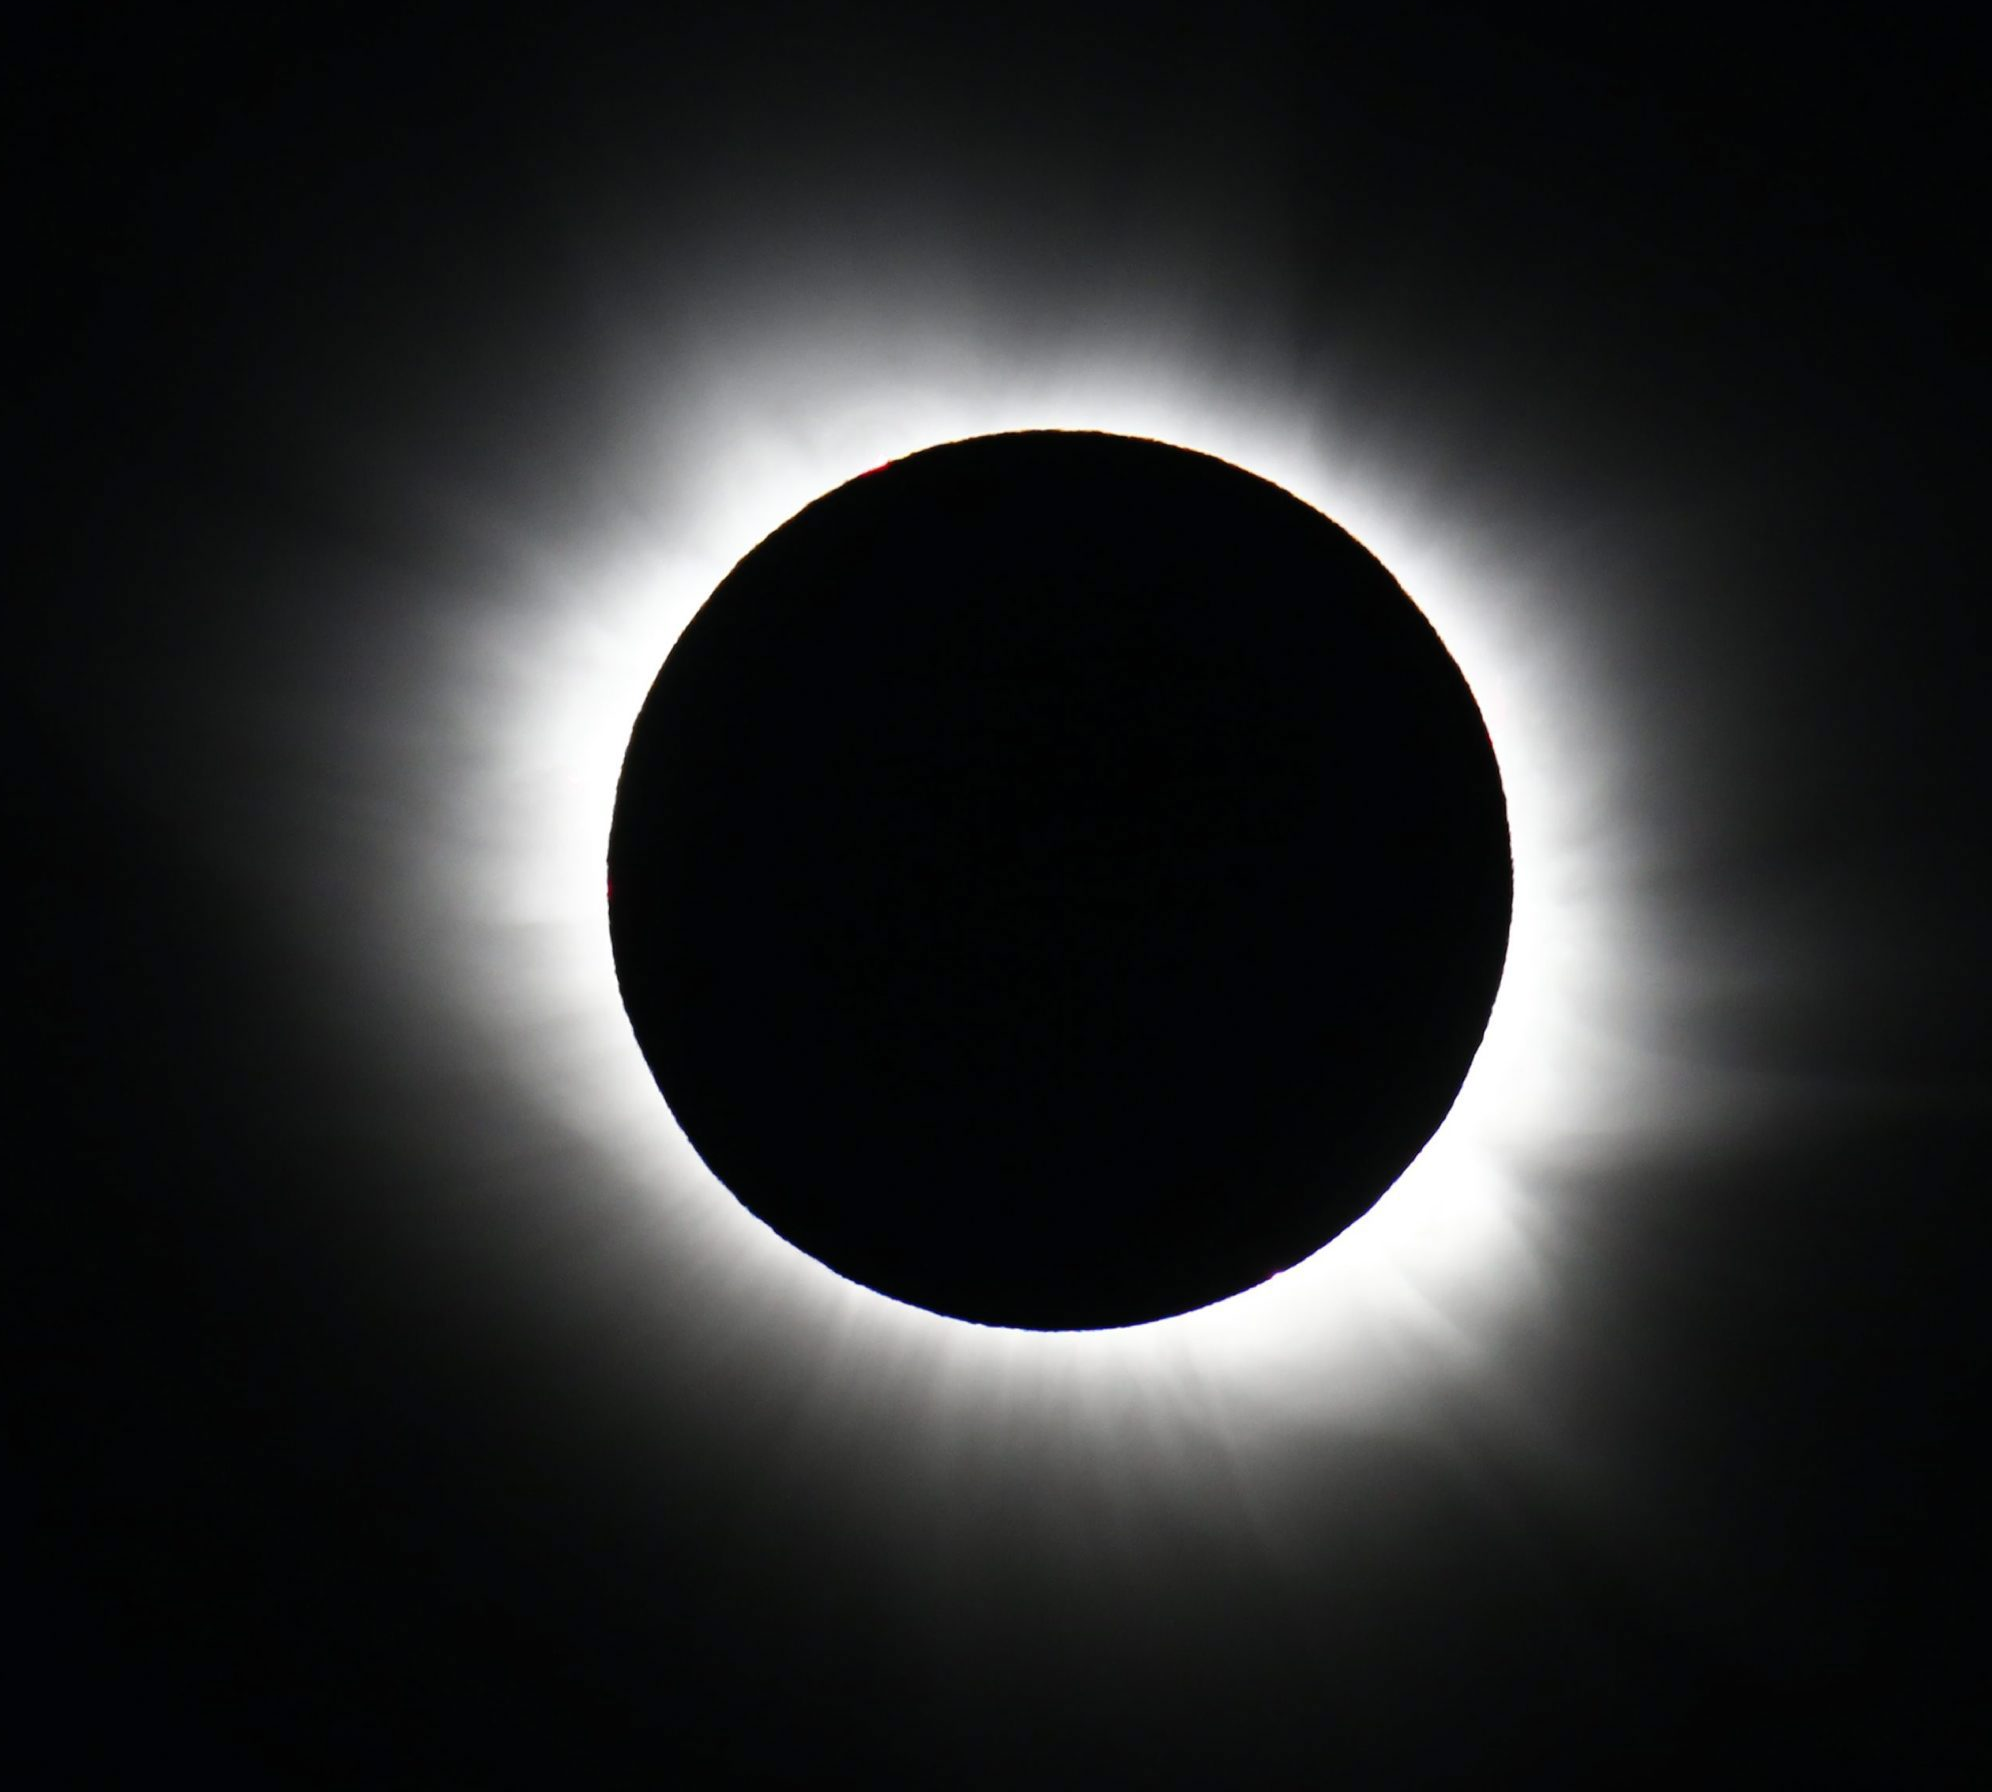 solar eclipse corona 2